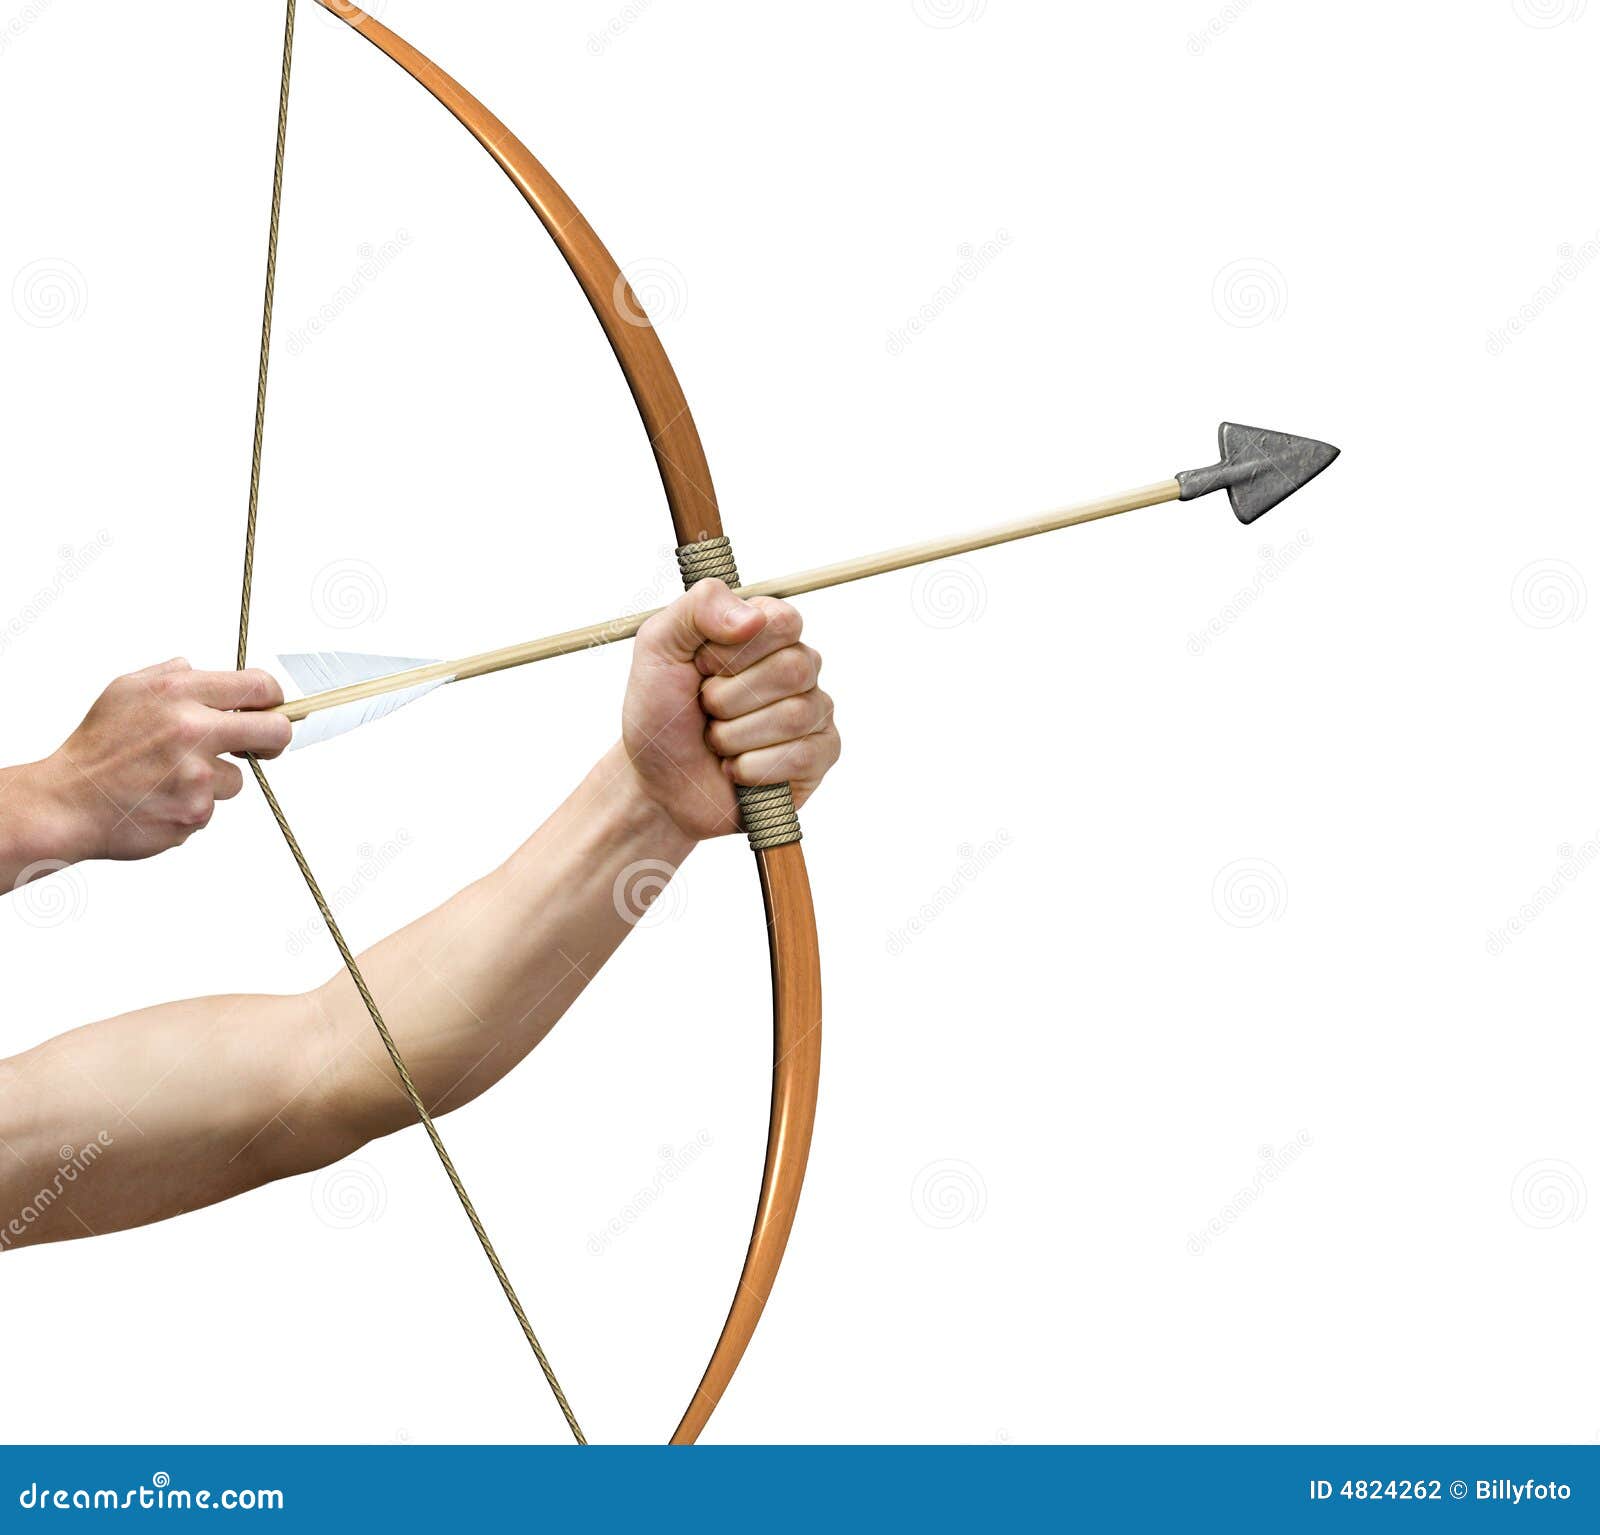 archer preparing to release arrow